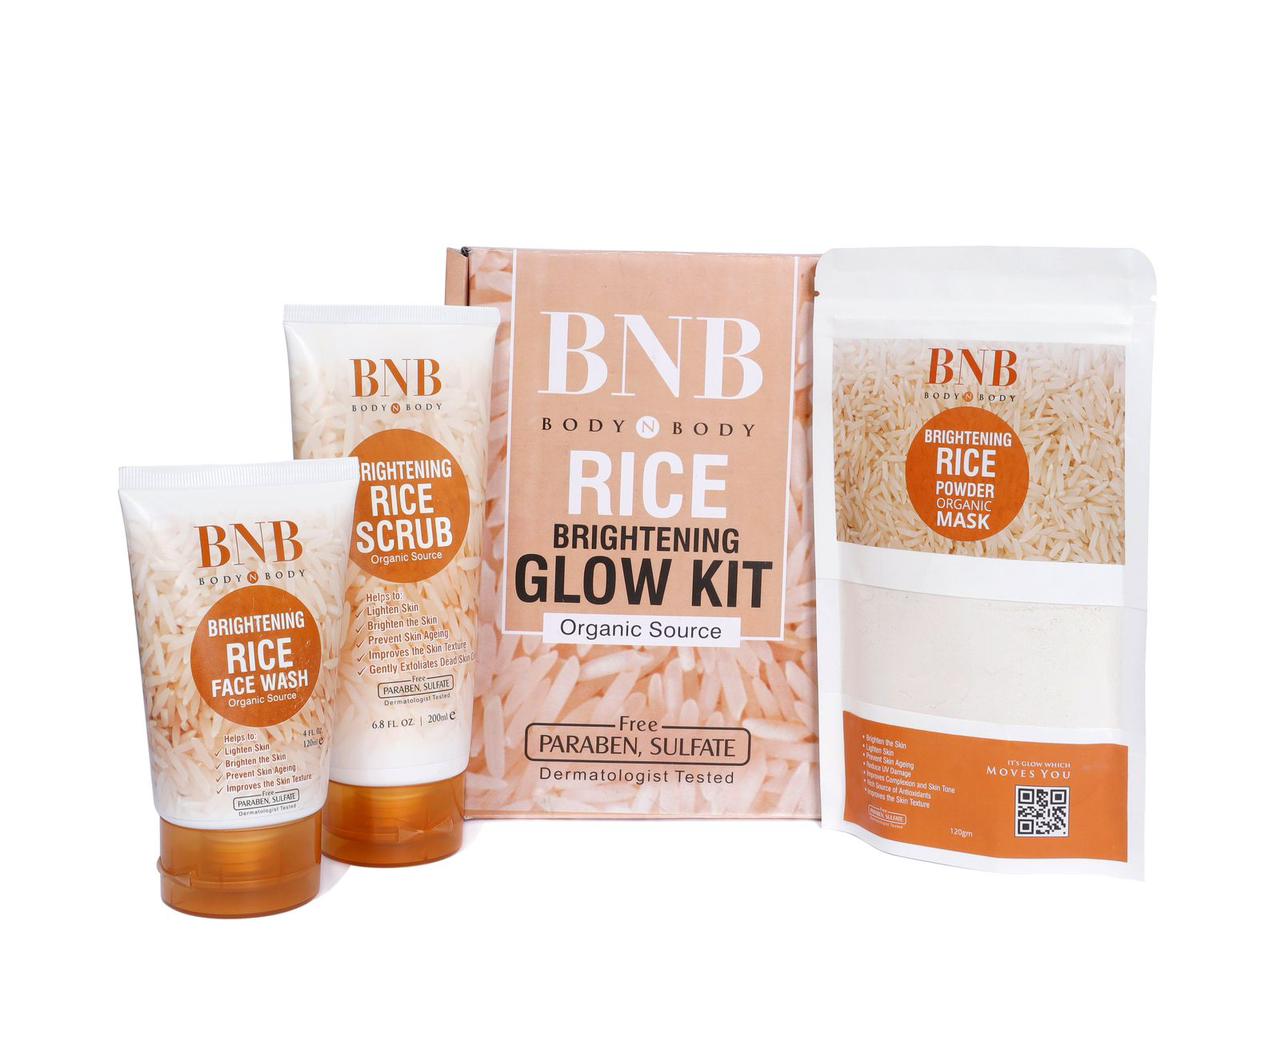 Bnb Rice brightening glow kit